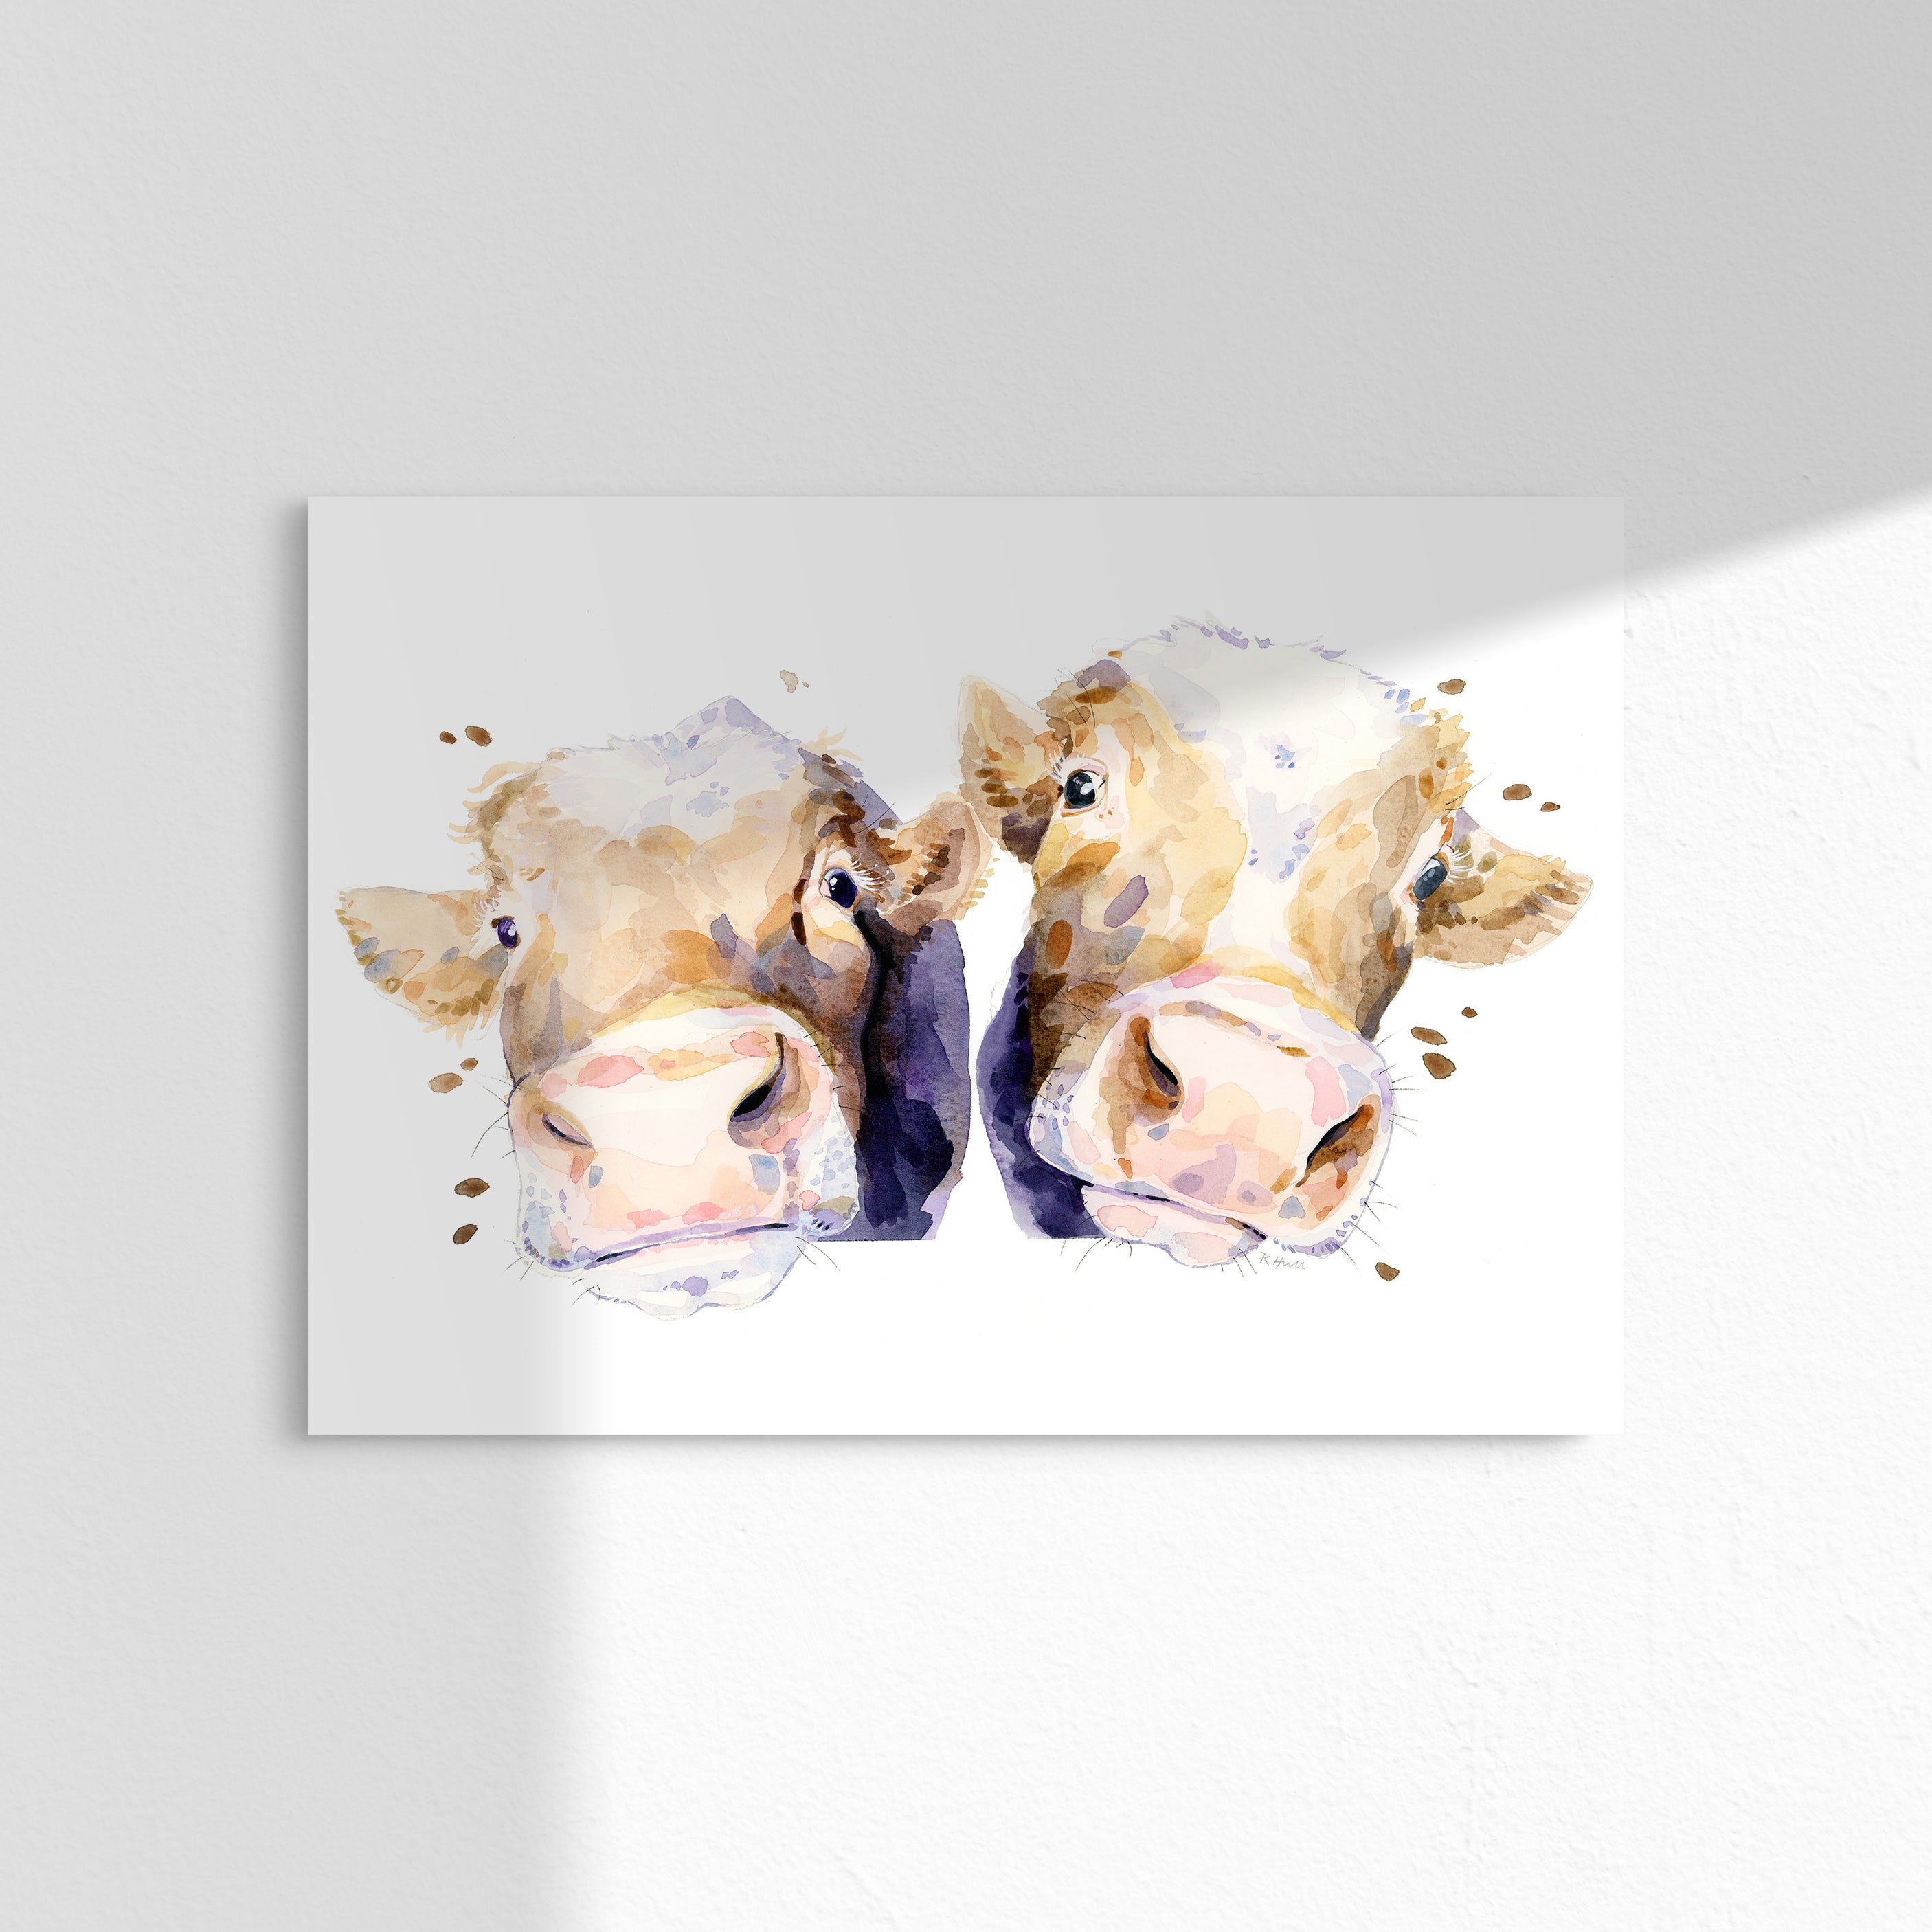 Cows A4/Letter Watercolour Print - "Pucker Up"